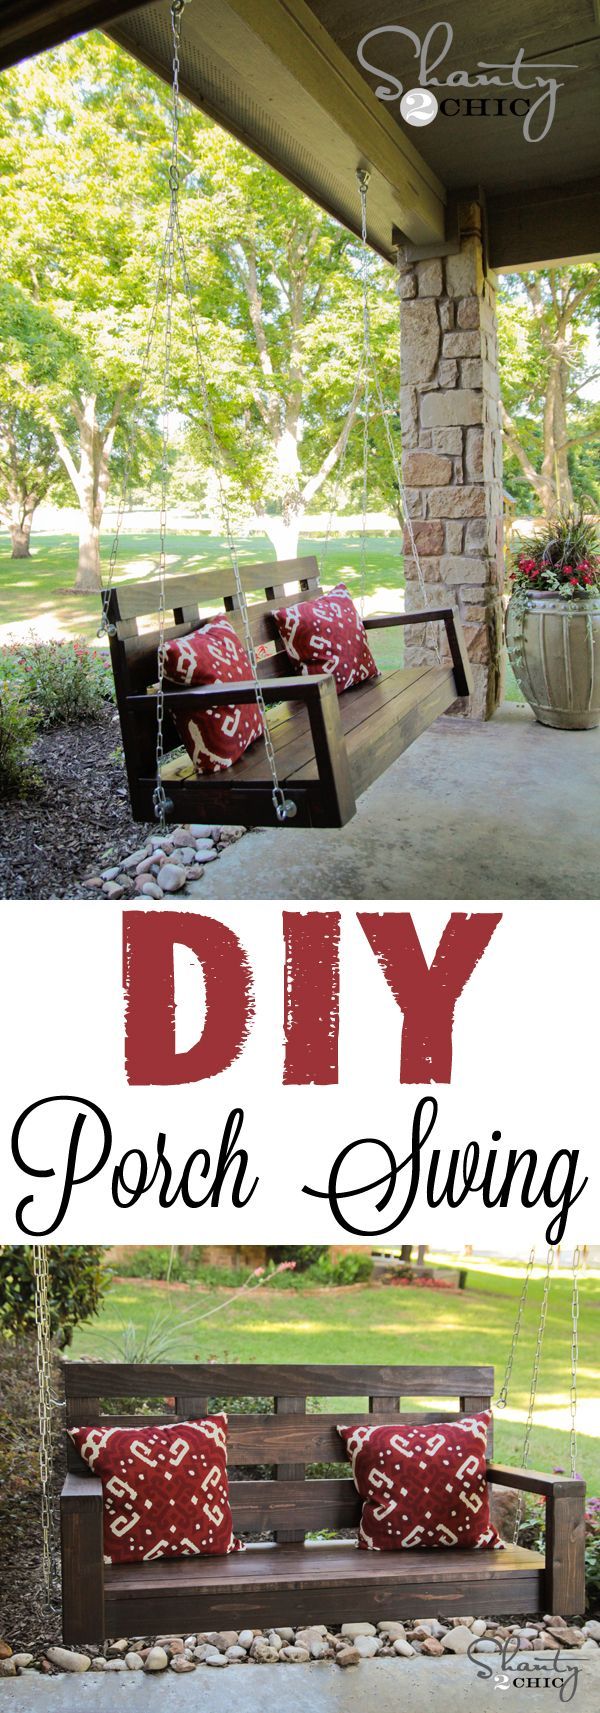 Porch Swing - DIY